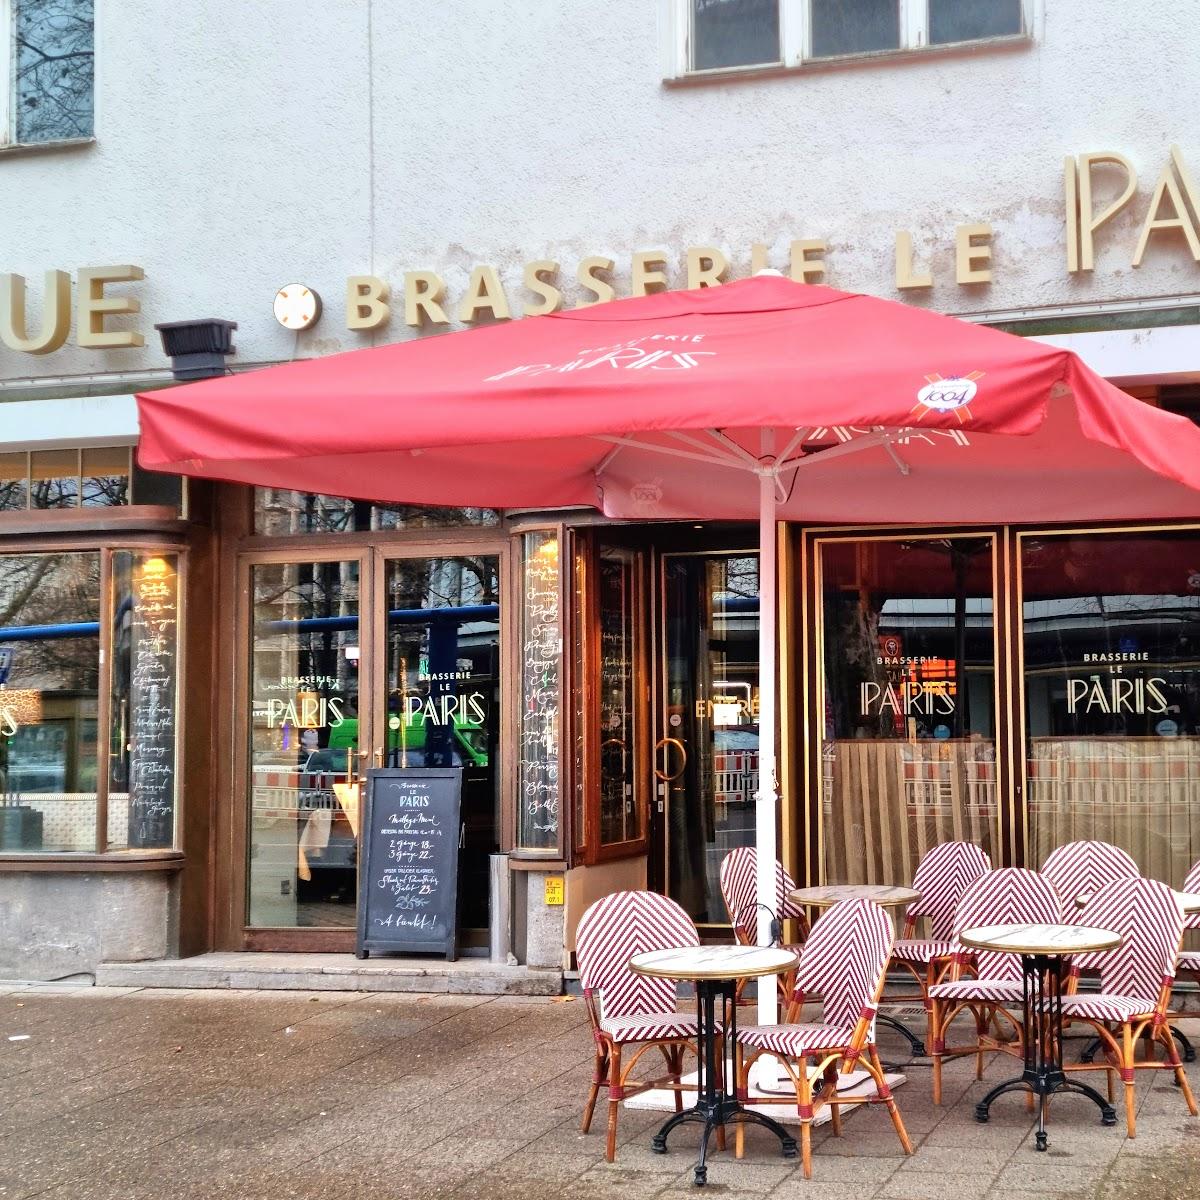 Restaurant "Brasserie Le Paris" in Berlin